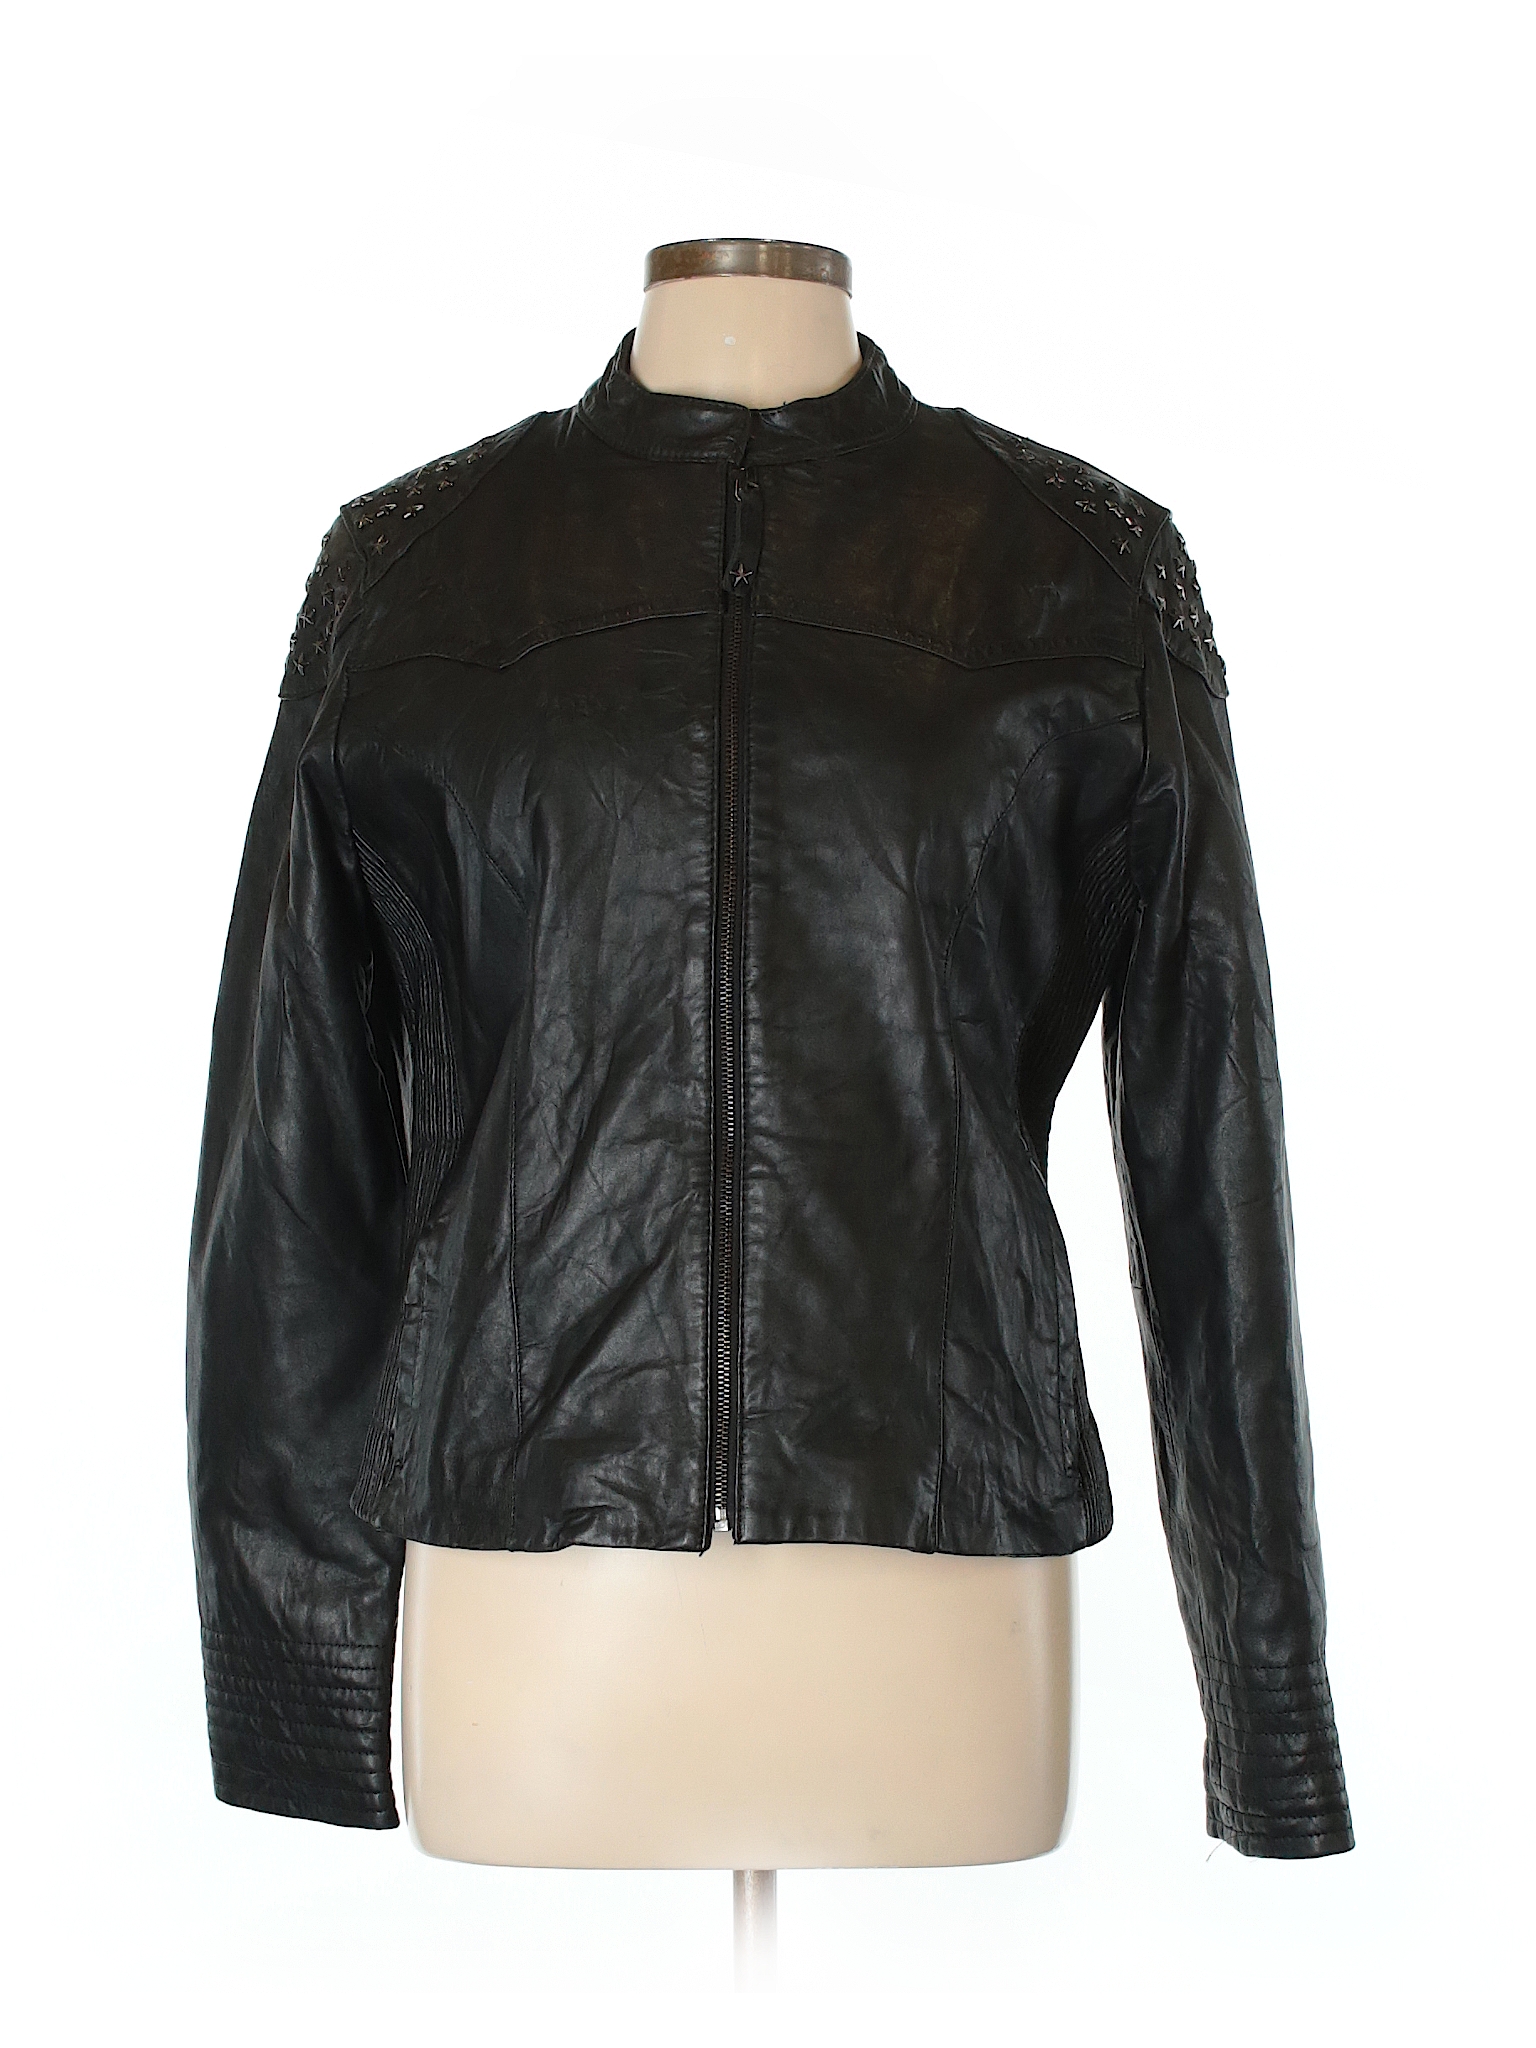 Knoles & Carter 100% Leather Black Leather Jacket Size XL - 77% off ...